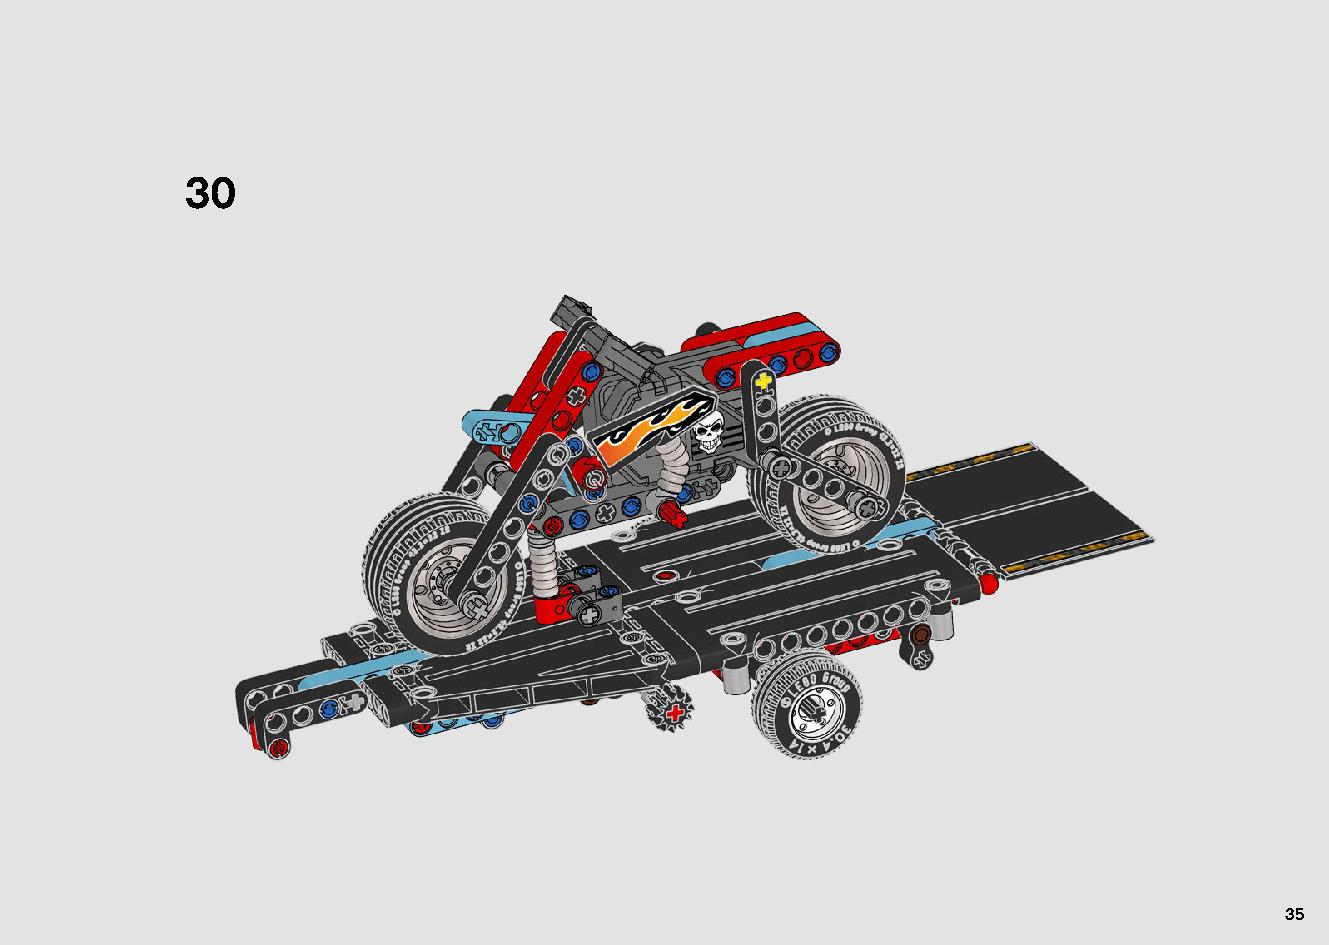 Stunt Show Truck & Bike 42106 LEGO information LEGO instructions 35 page